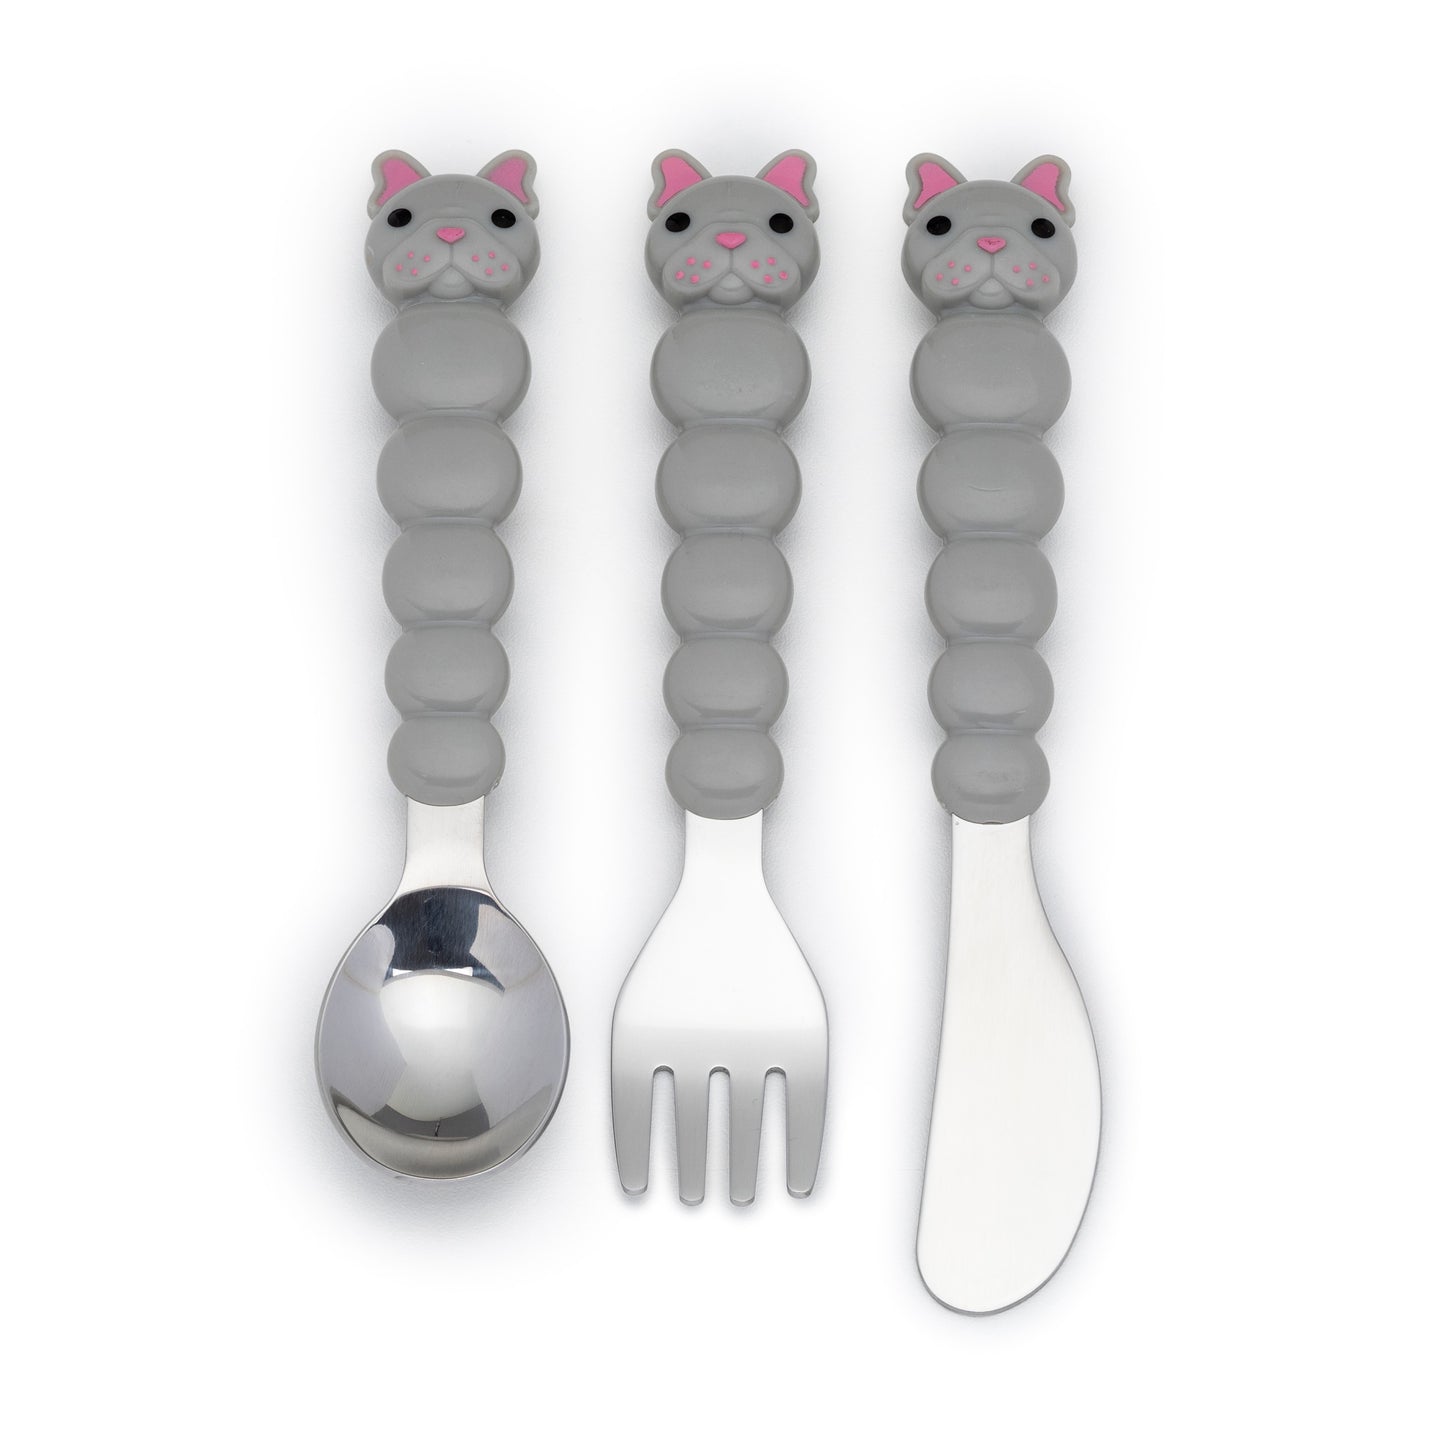 melii Colorful Animal Spoon & Fork Sets for Kids - Encourages Independent Feeding and Fine Motor Skills - BPA-Free, Dishwasher Safe - Purple Cat & Grey Bulldog (6 Pcs)